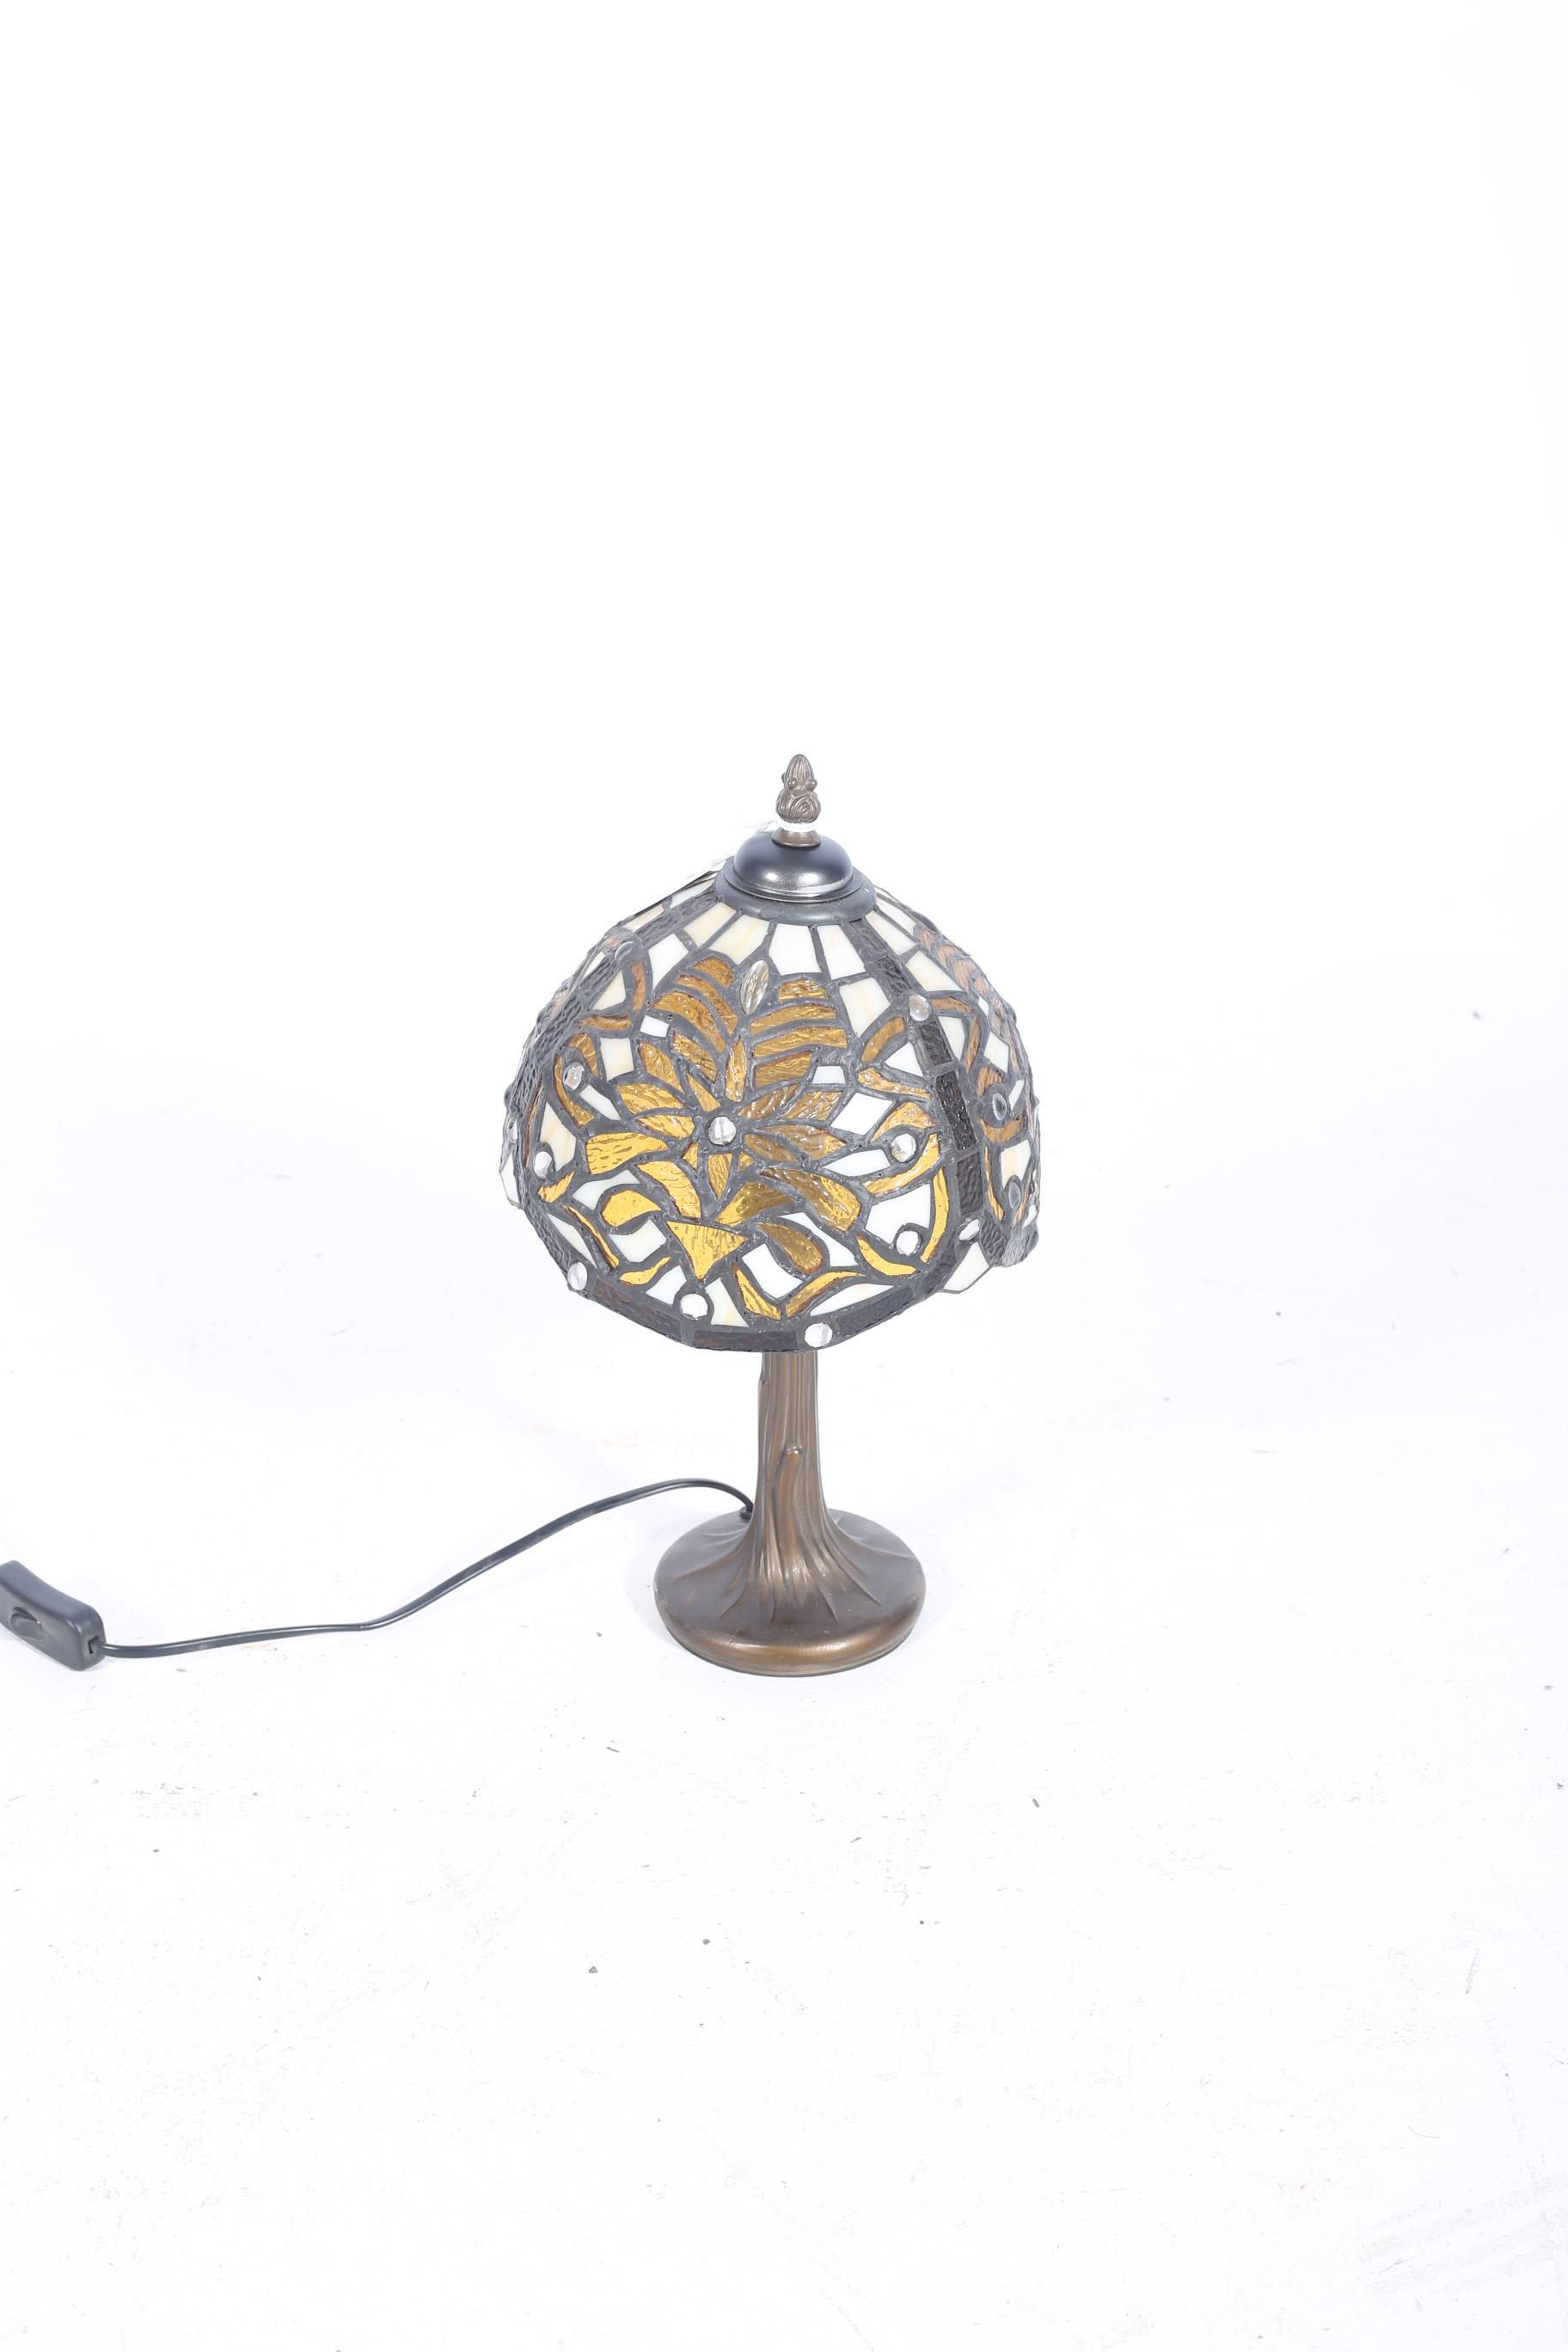 AN ART DECO DESIGN TABLE LAMP the multicoloured lead glass mushroom shaped shade above a